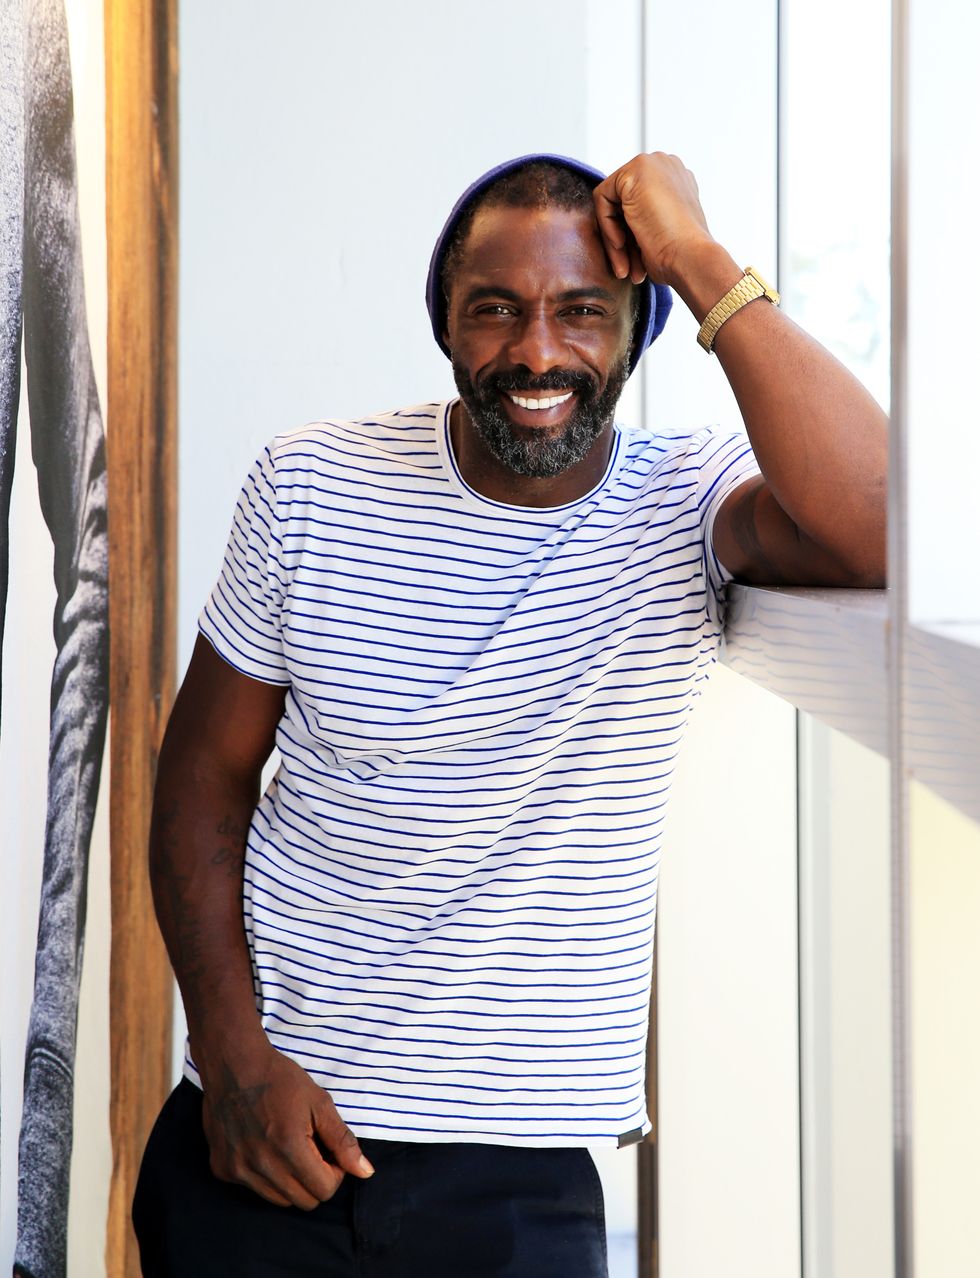 26 Hot Photos of Idris Elba - Idris Elba Sexiest Man Alive 2018